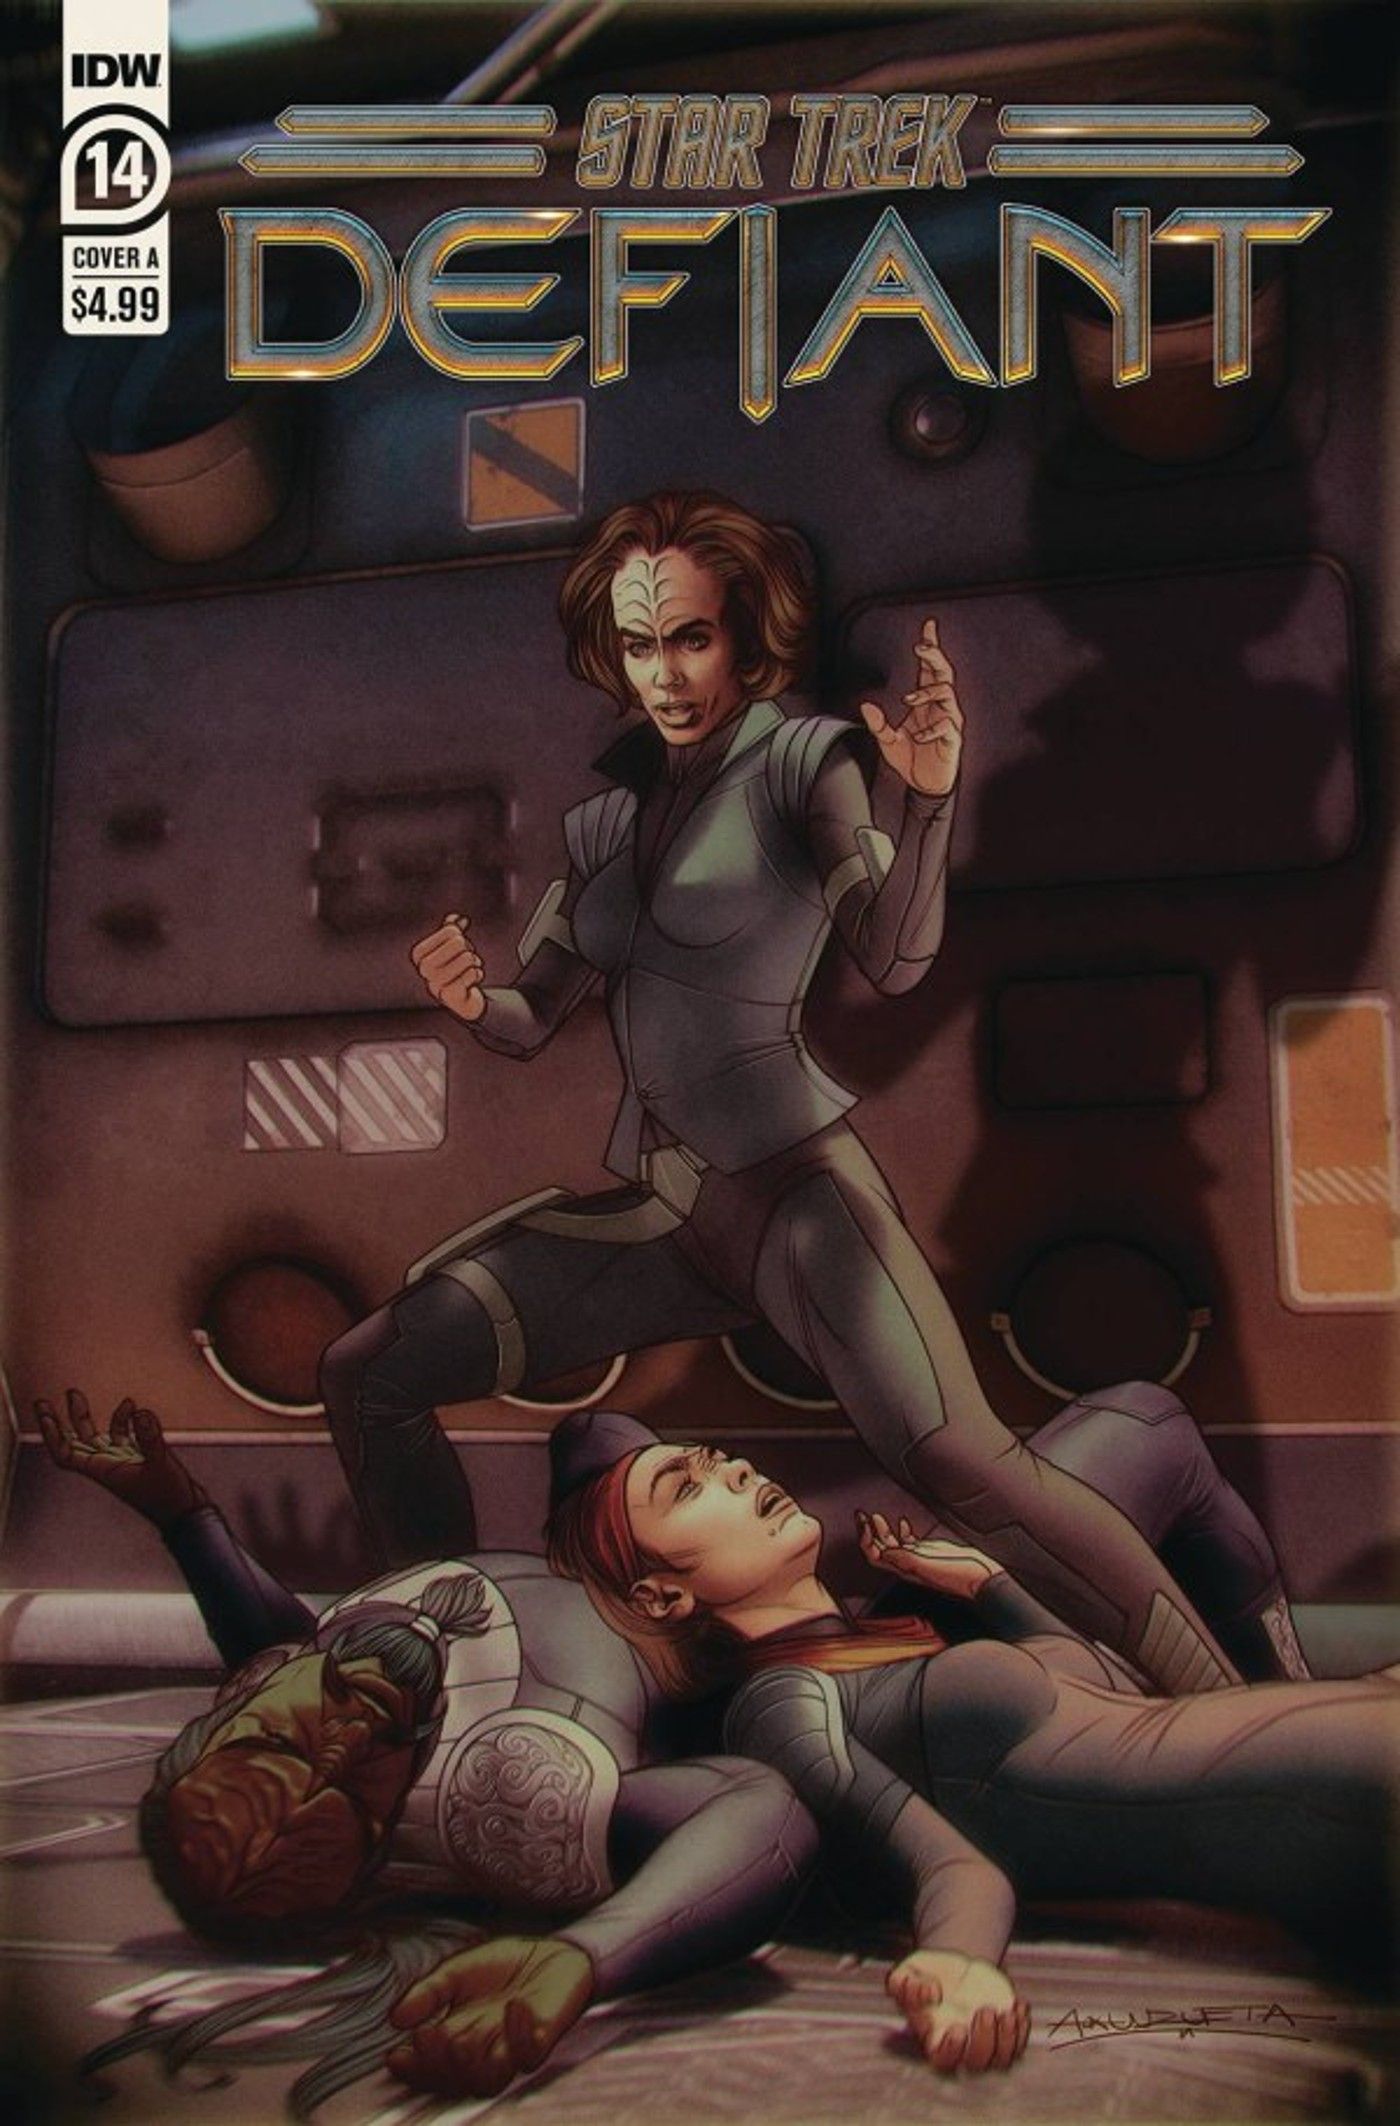 Image of B'Lanna Torres standing over Worf and Ro Laren.